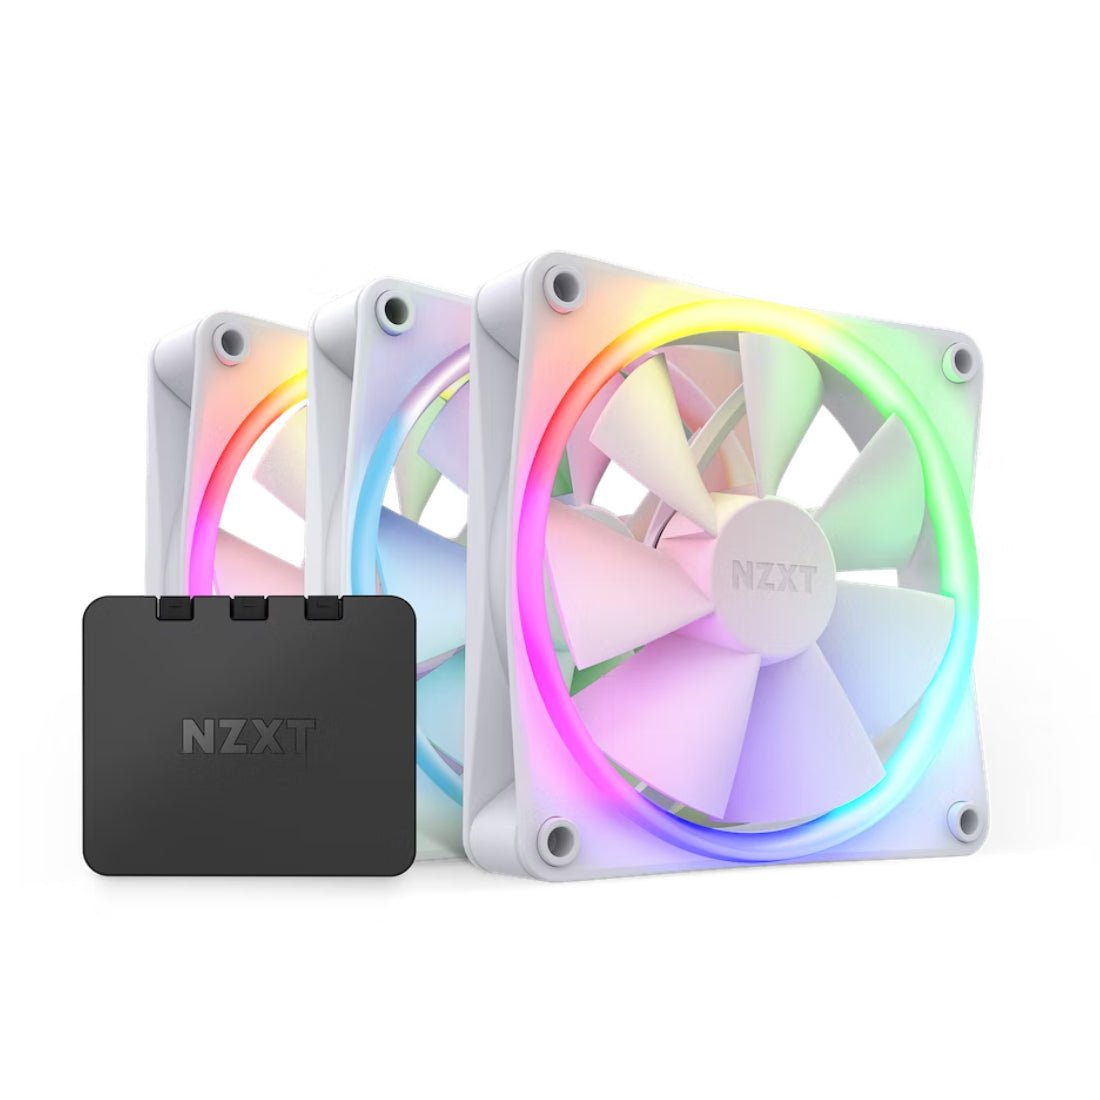 NZXT F120 Triple 120mm RGB Fans & Controller - White - مروحة تبريد - Store 974 | ستور ٩٧٤